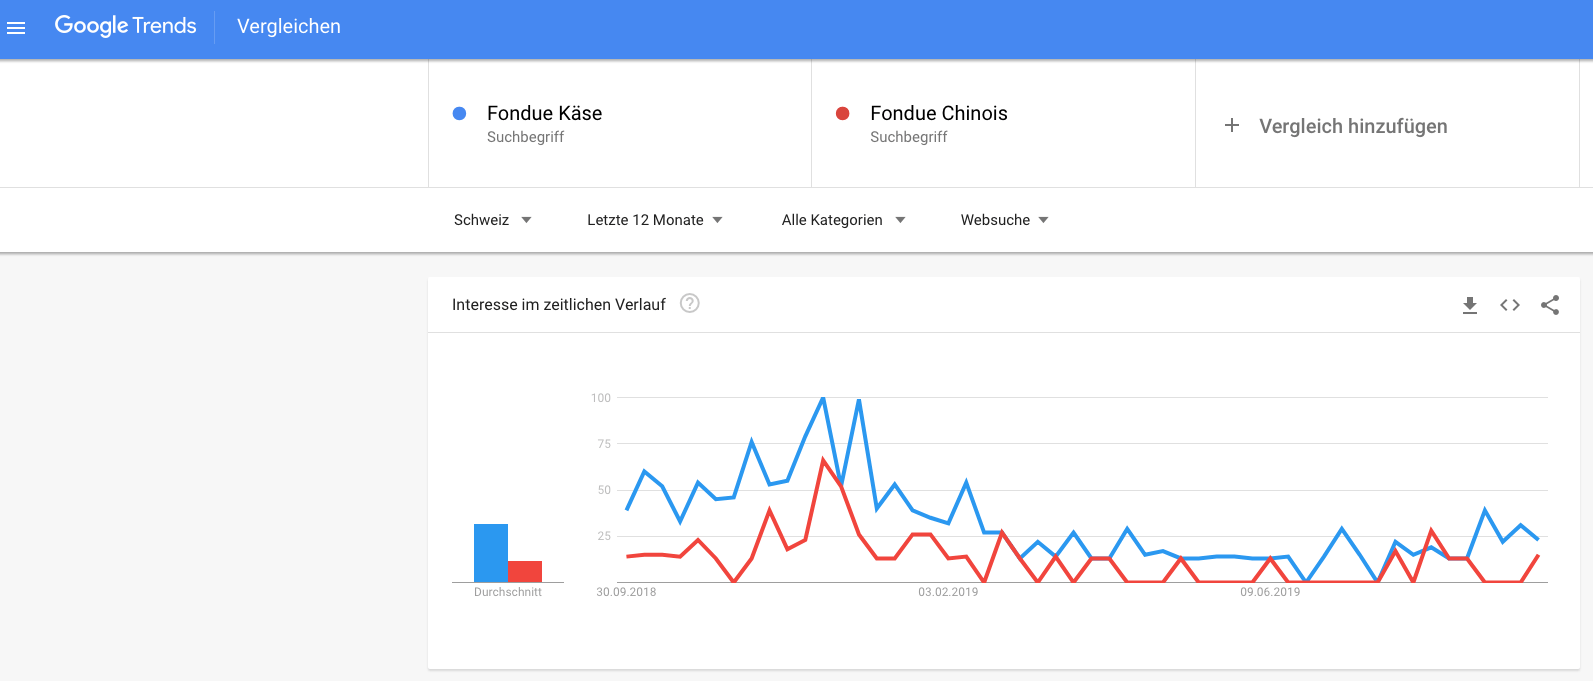 Keyword-Trends mit Google Trends finden